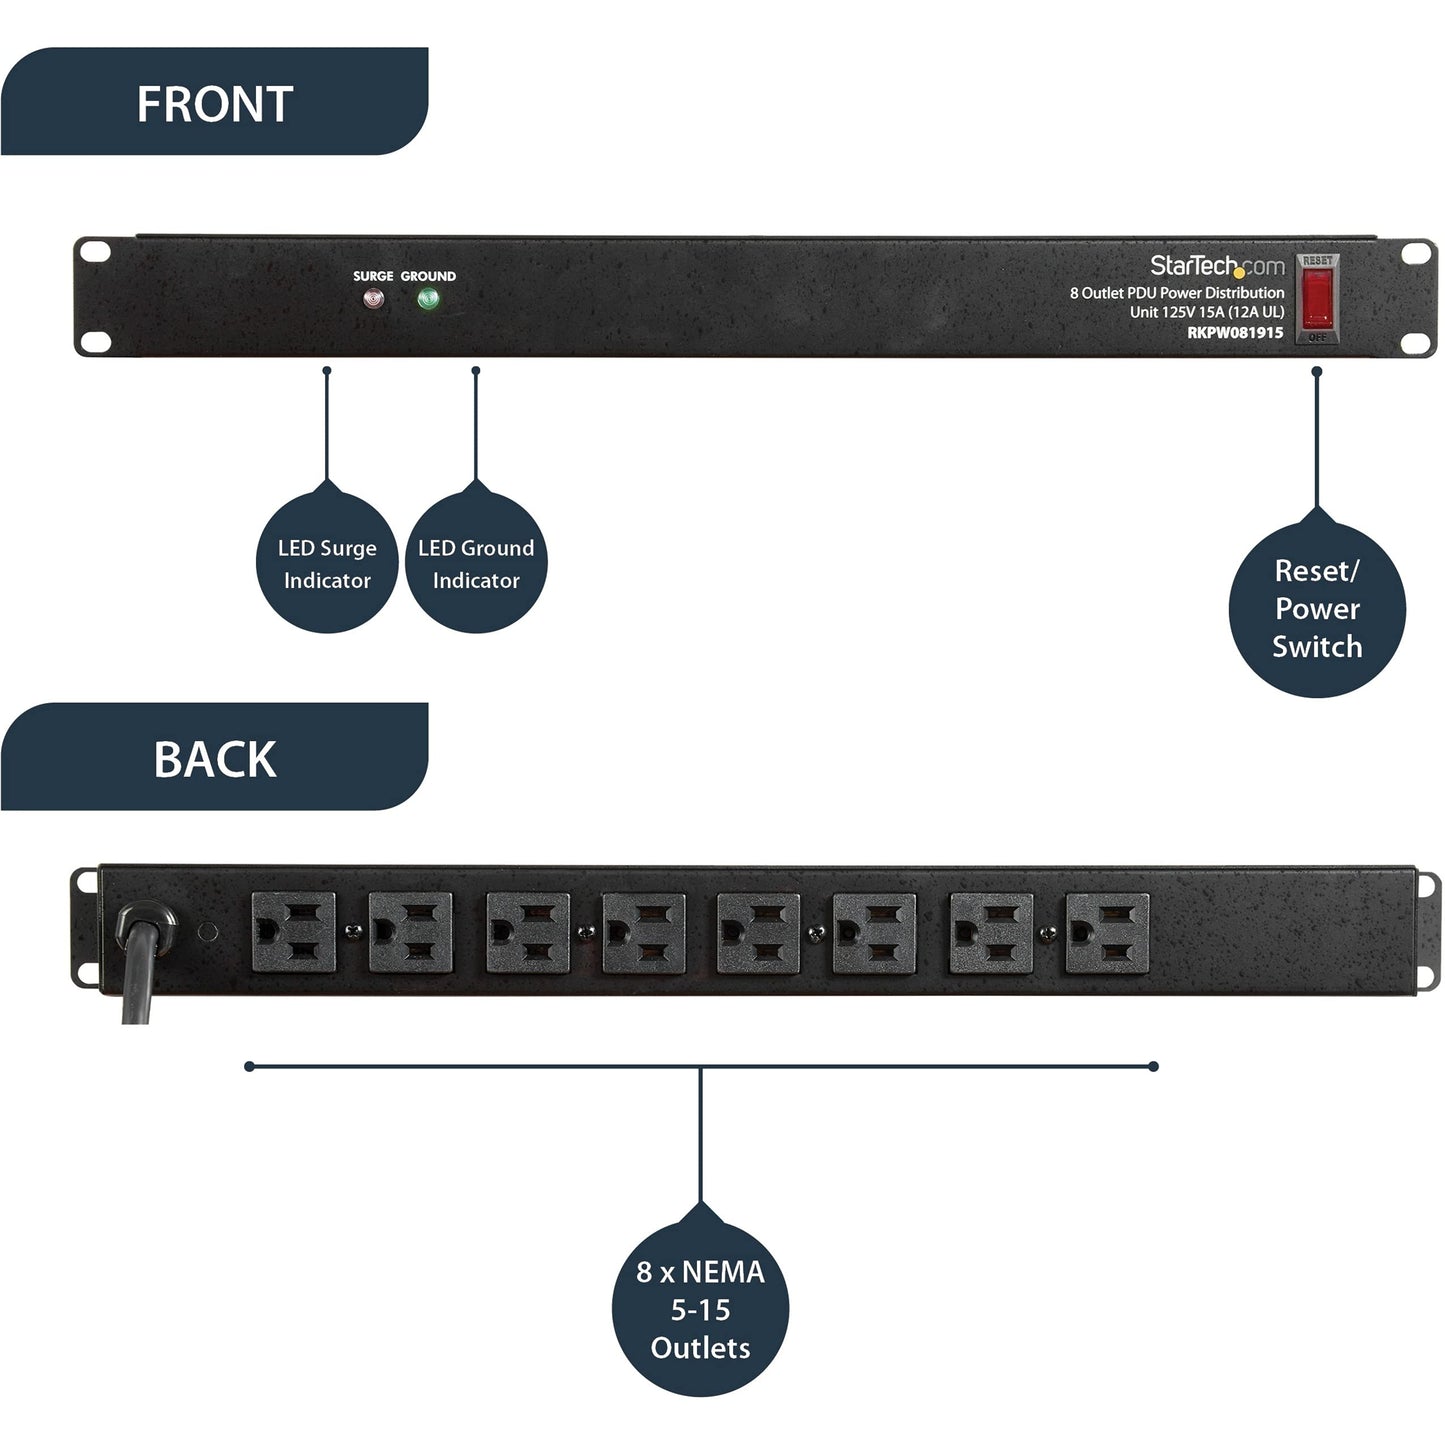 StarTech.com 8 Outlet Horizontal 1U Rack Mount PDU Power Strip for Network Server Racks - Surge Protection - 120V/15A - with 6 Ft Power Cord (RKPW081915), Black